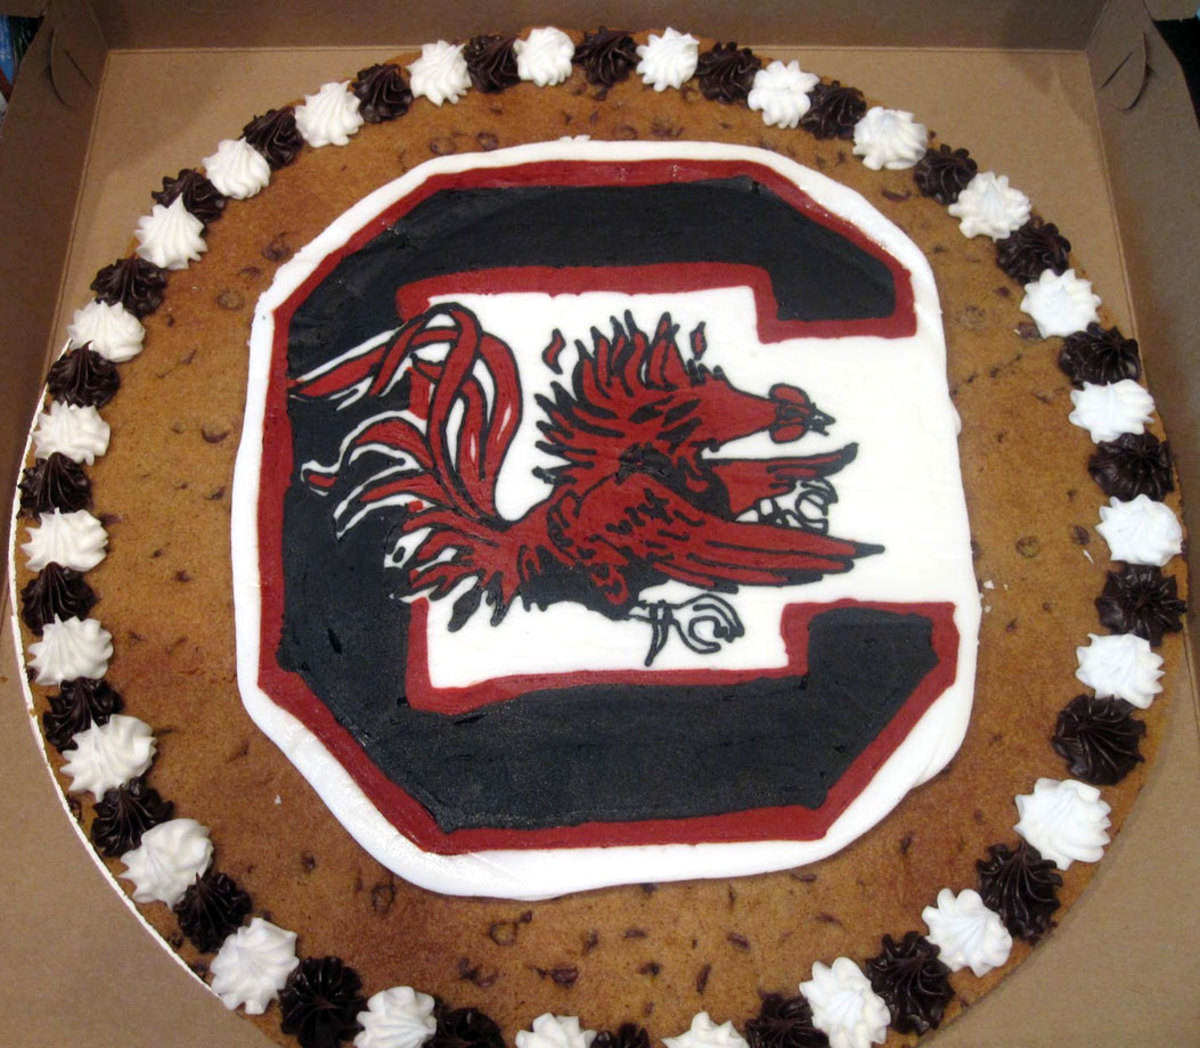 2014-0811-South-Carolina-Gamecocks-cookie-cake.jpg